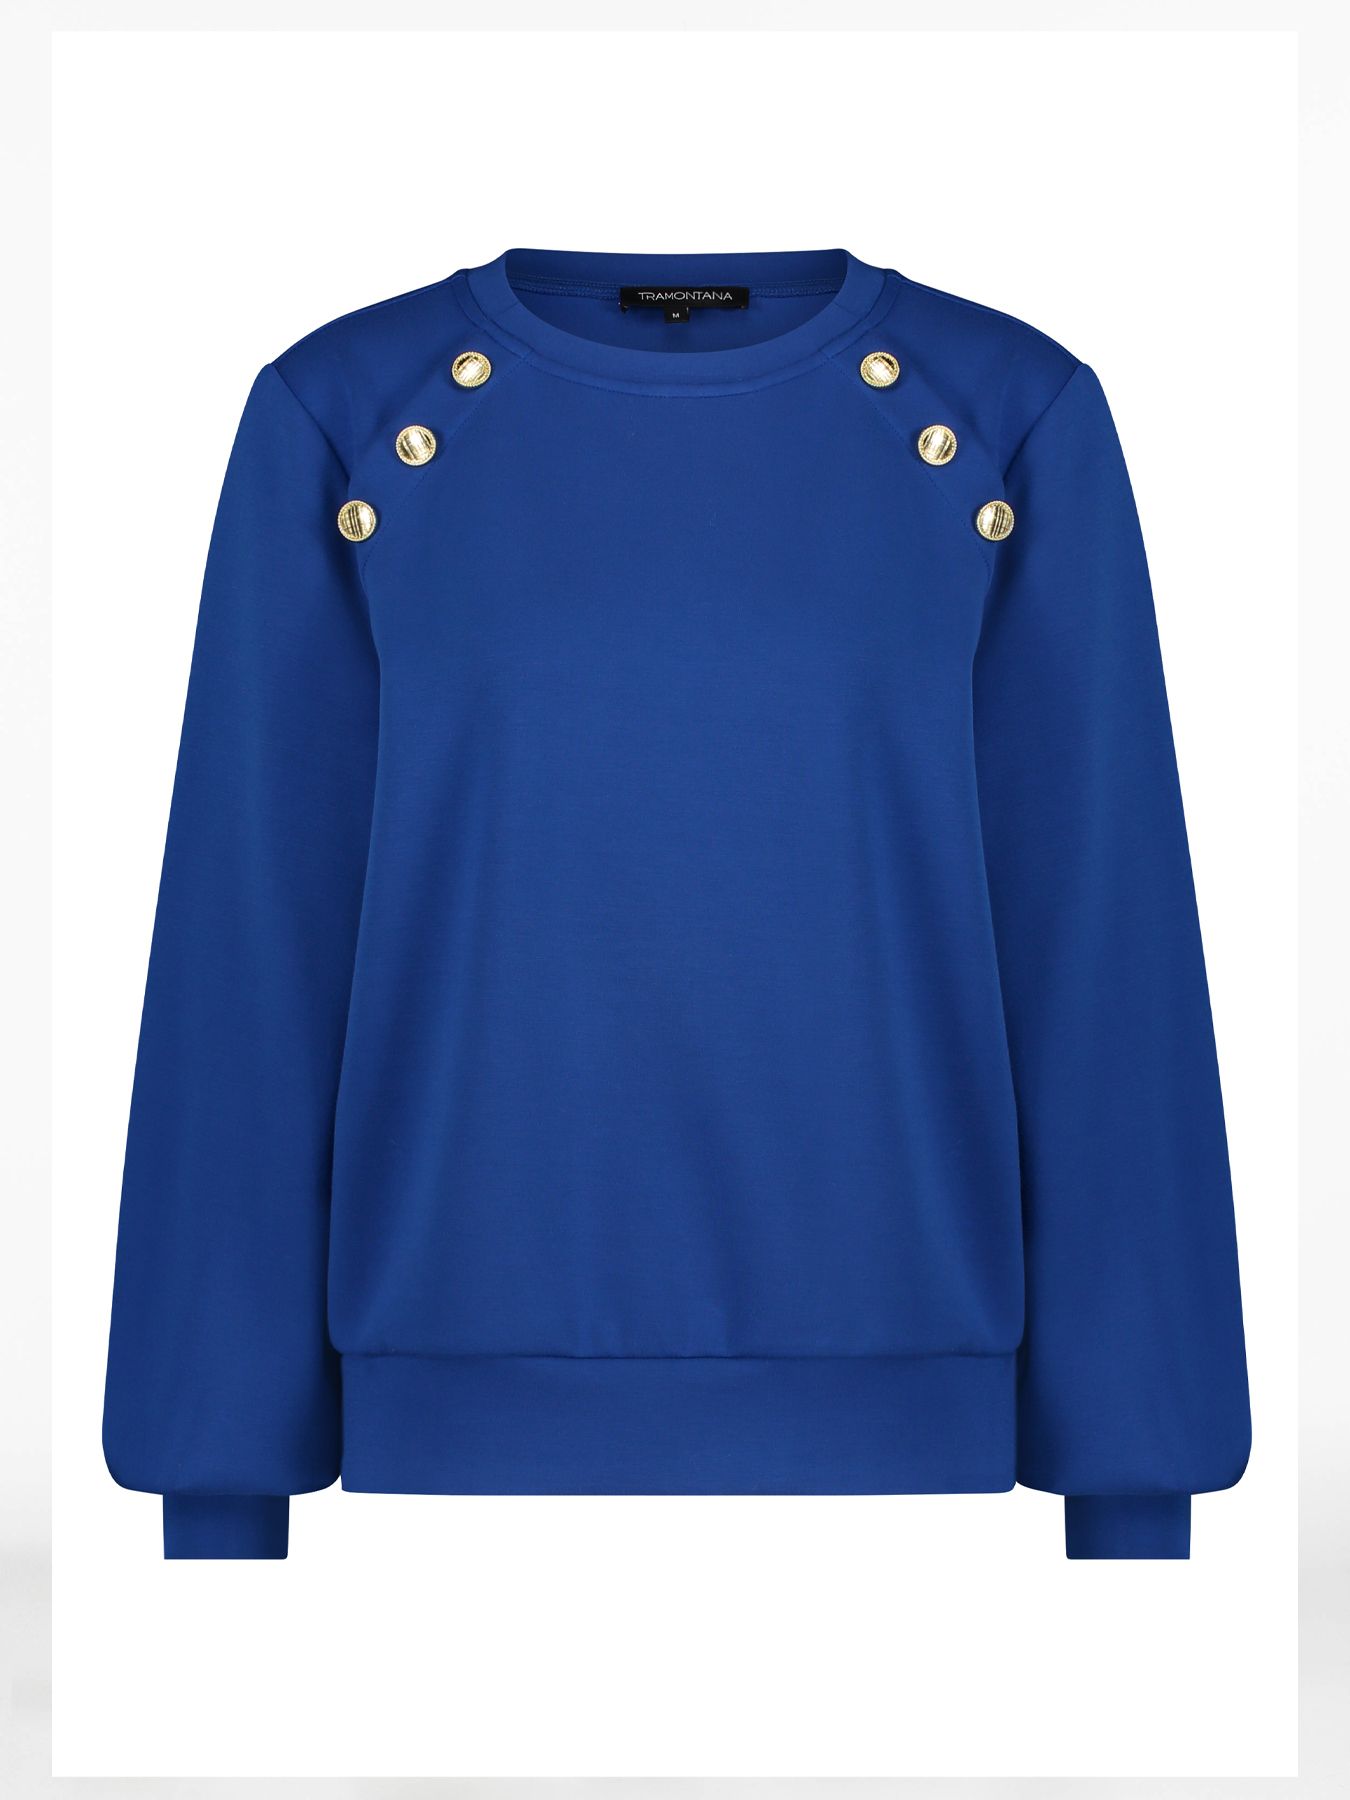 Tramontana Sweater Sailor Details Bright Blue 005010 00102786-EKA26012900000015